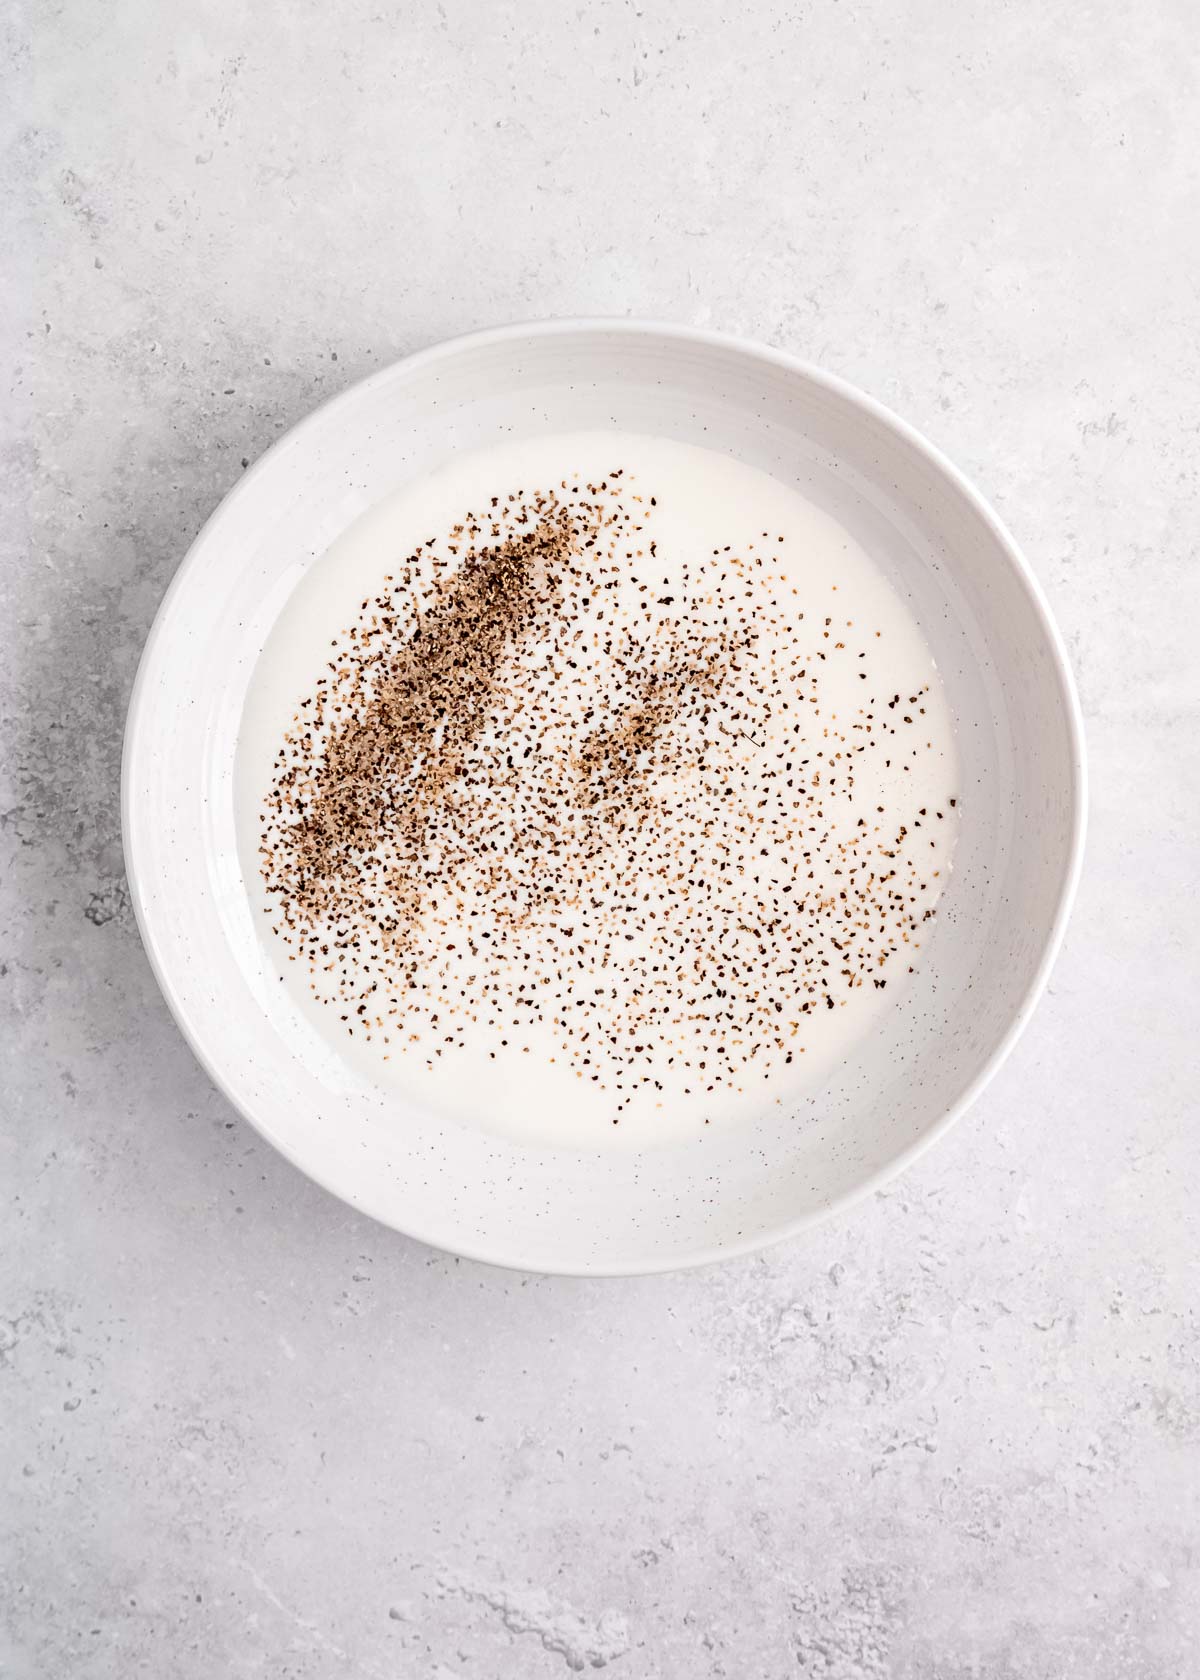 buttermilk, salt and pepper in bowl